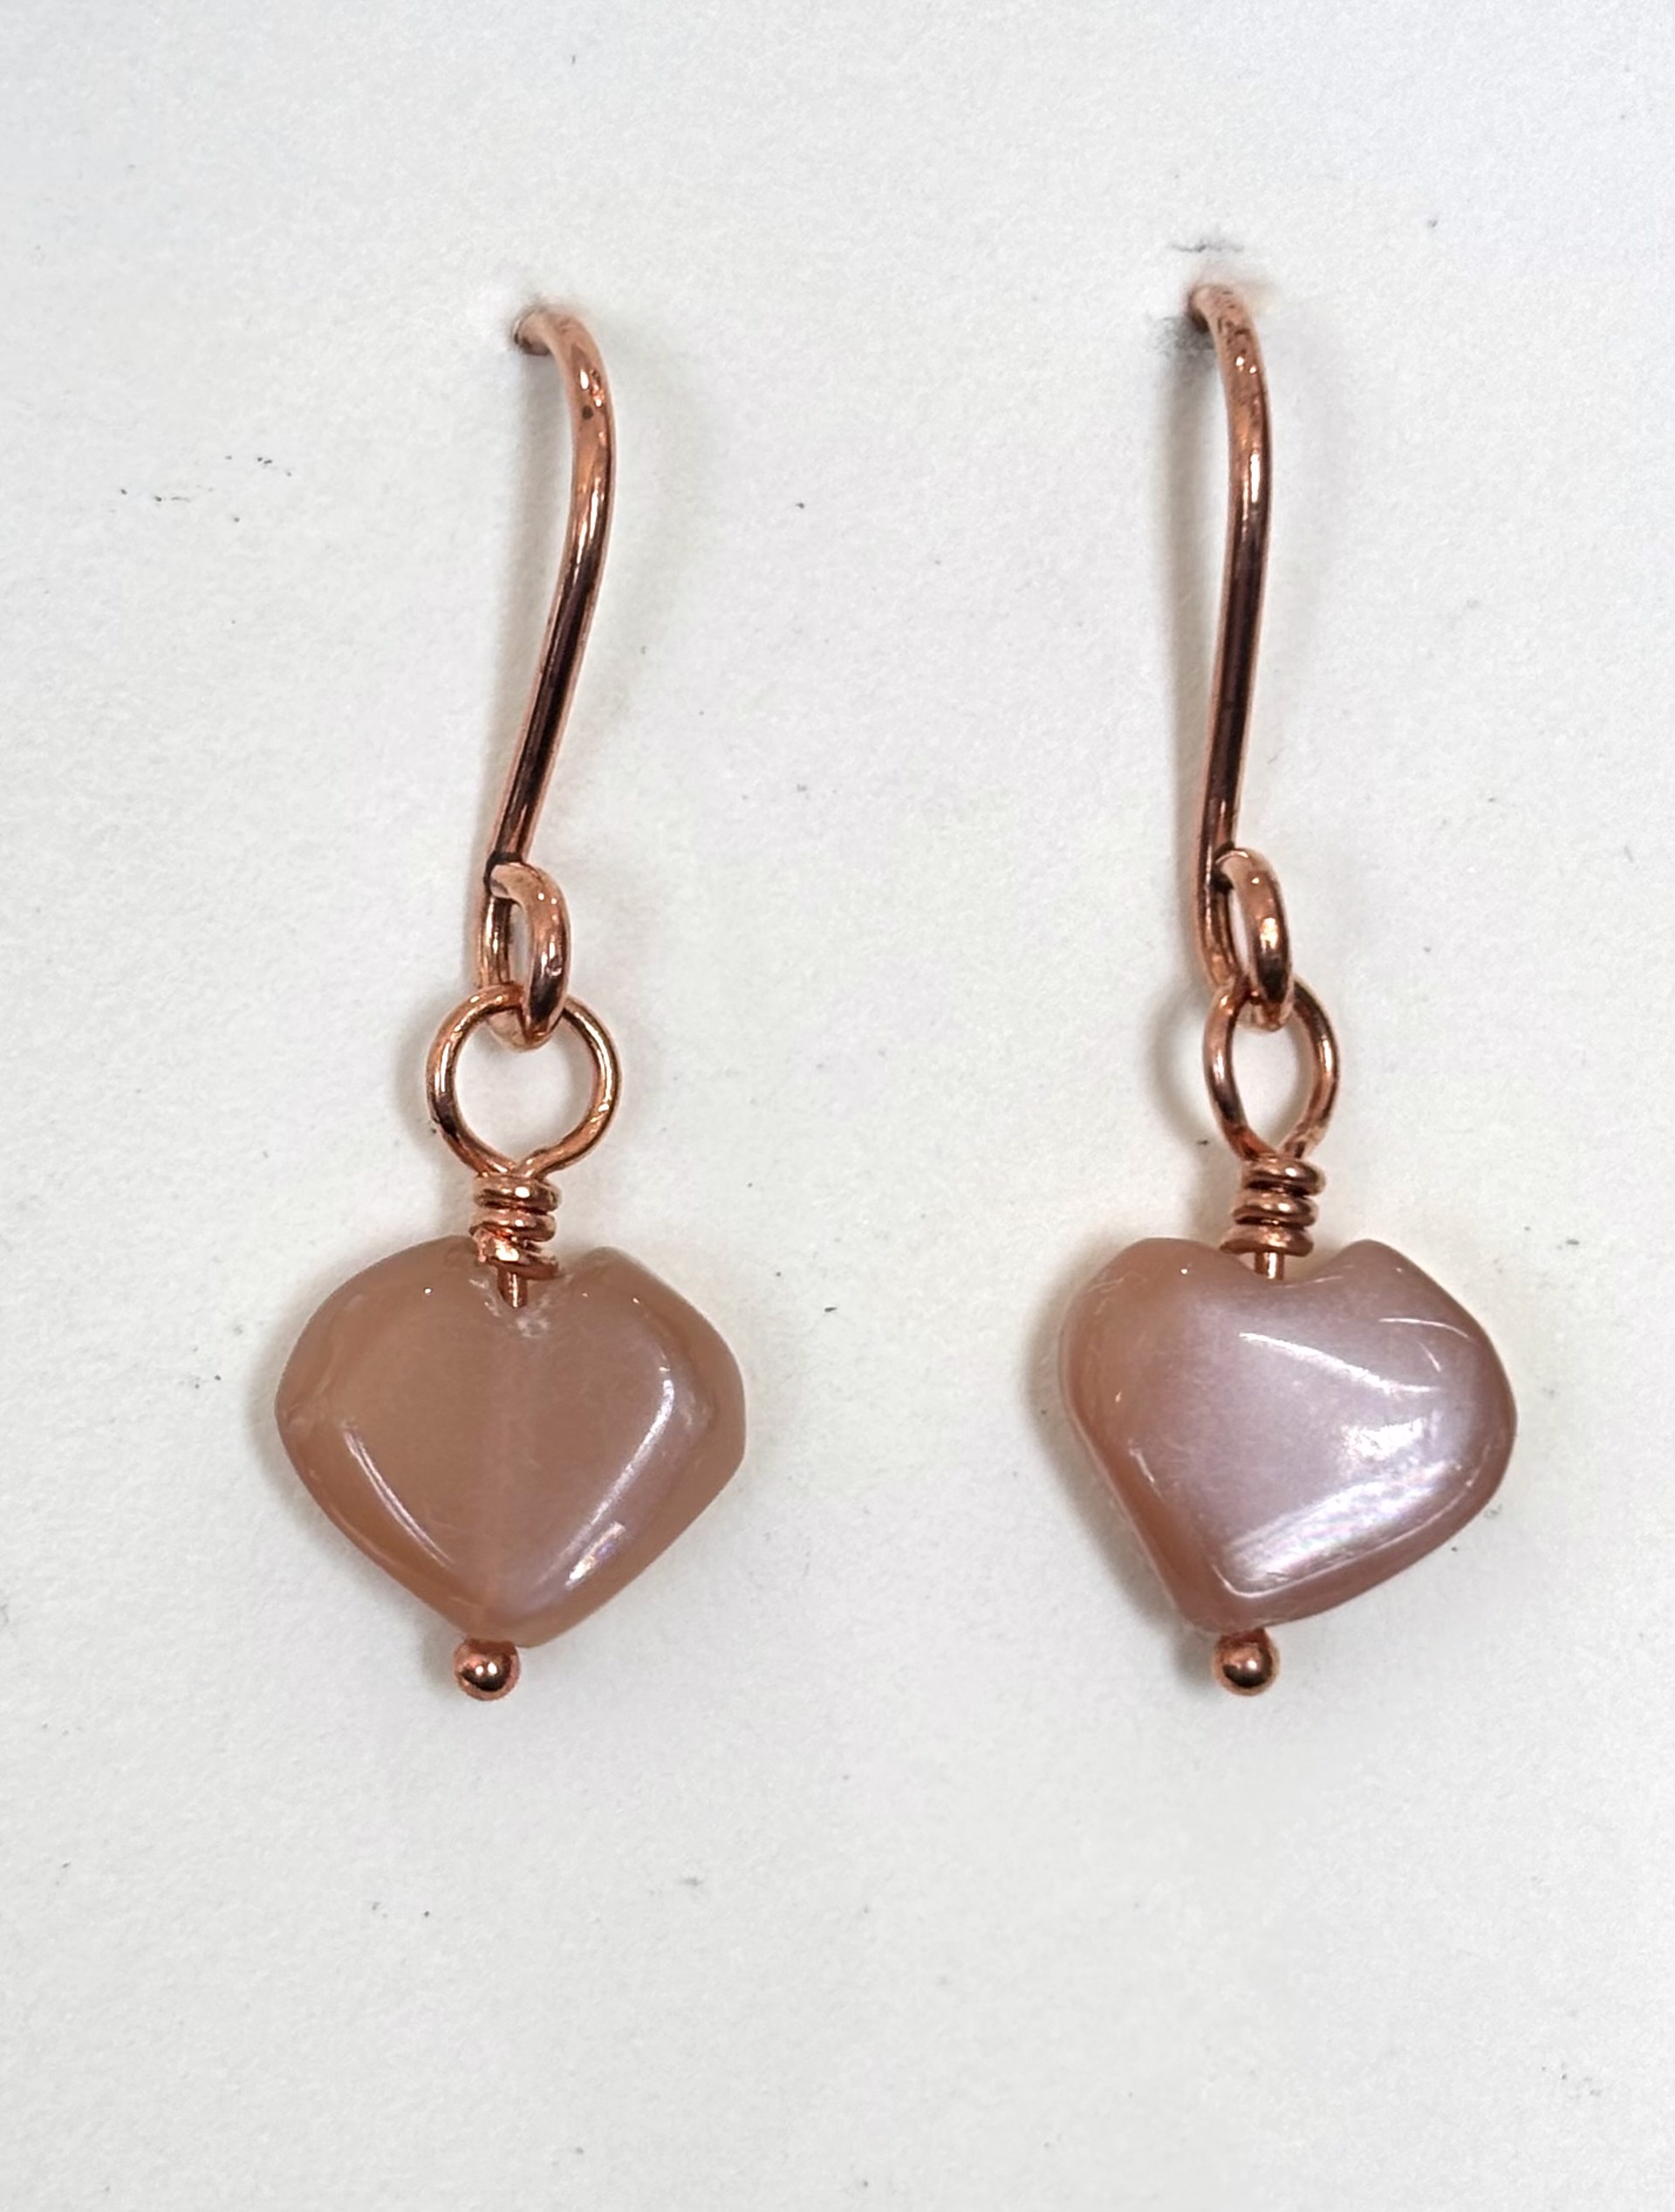 Peach Moonstone and Copper Wire Earrings by Emelie Hebert